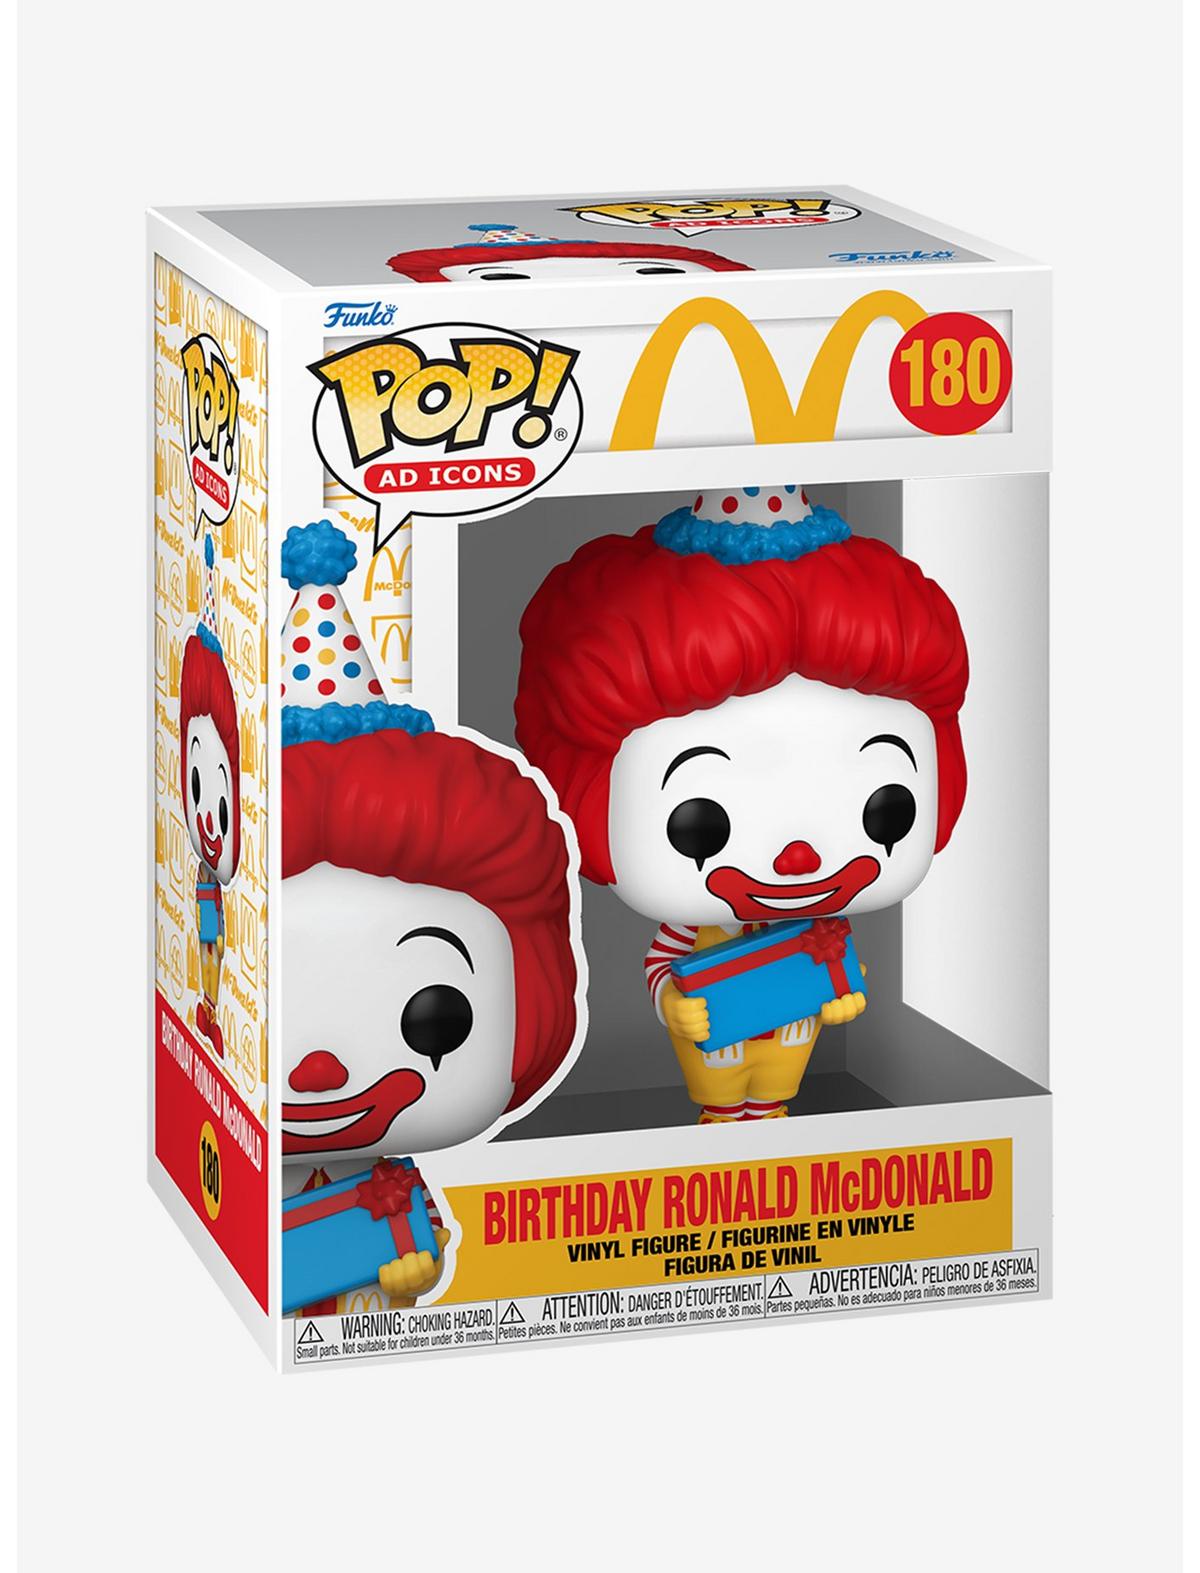 Ad Icons: McDonalds - Birthday Ronald McDonald Pop! Vinyl Figure (180)